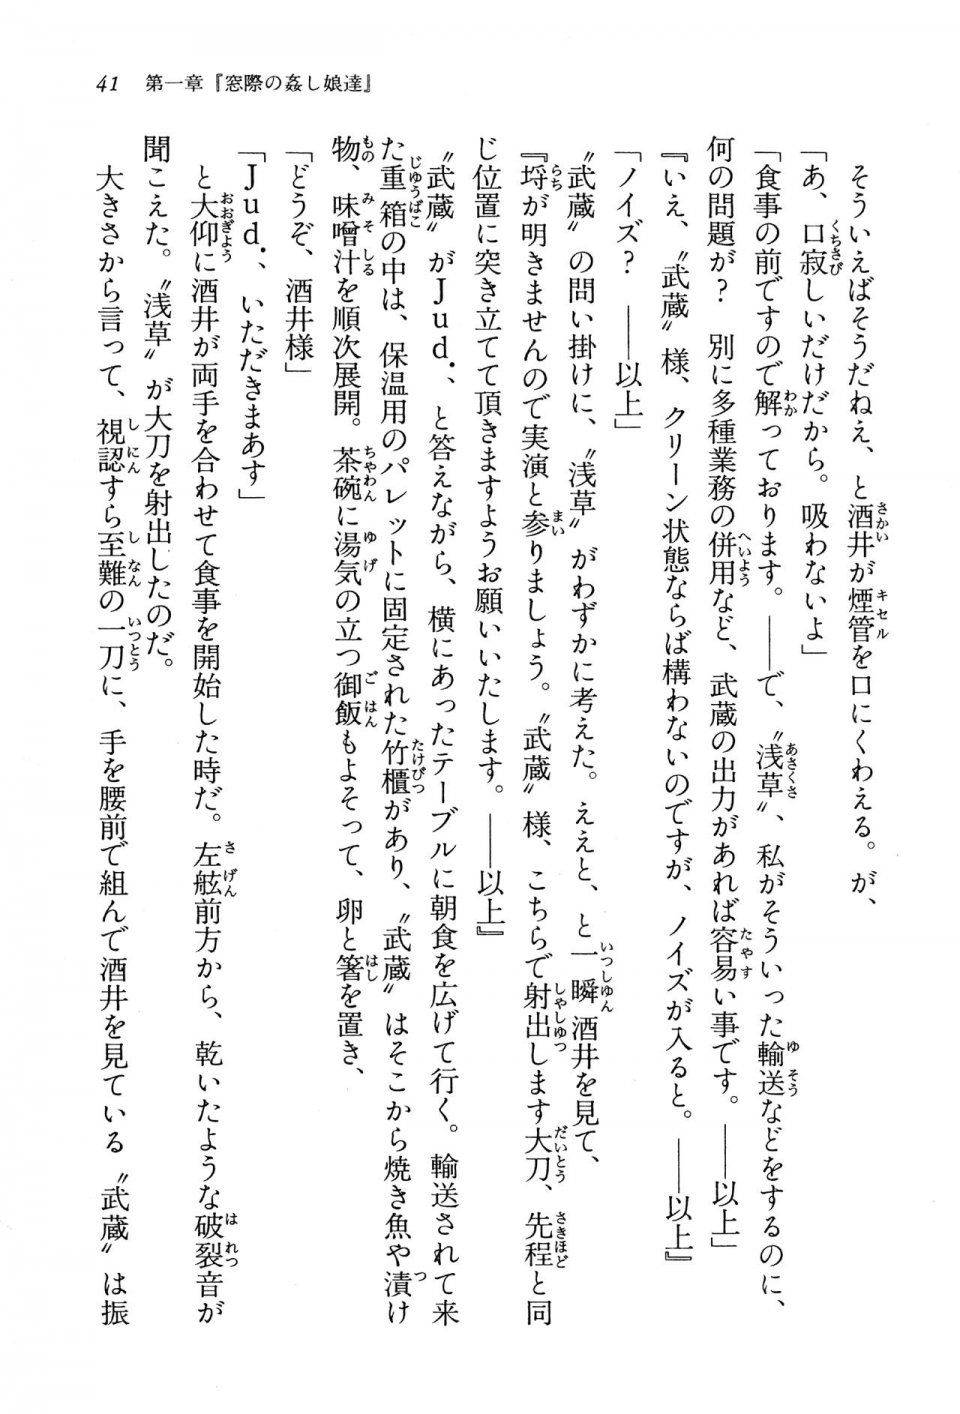 Kyoukai Senjou no Horizon BD Special Mininovel Vol 5(3A) - Photo #45